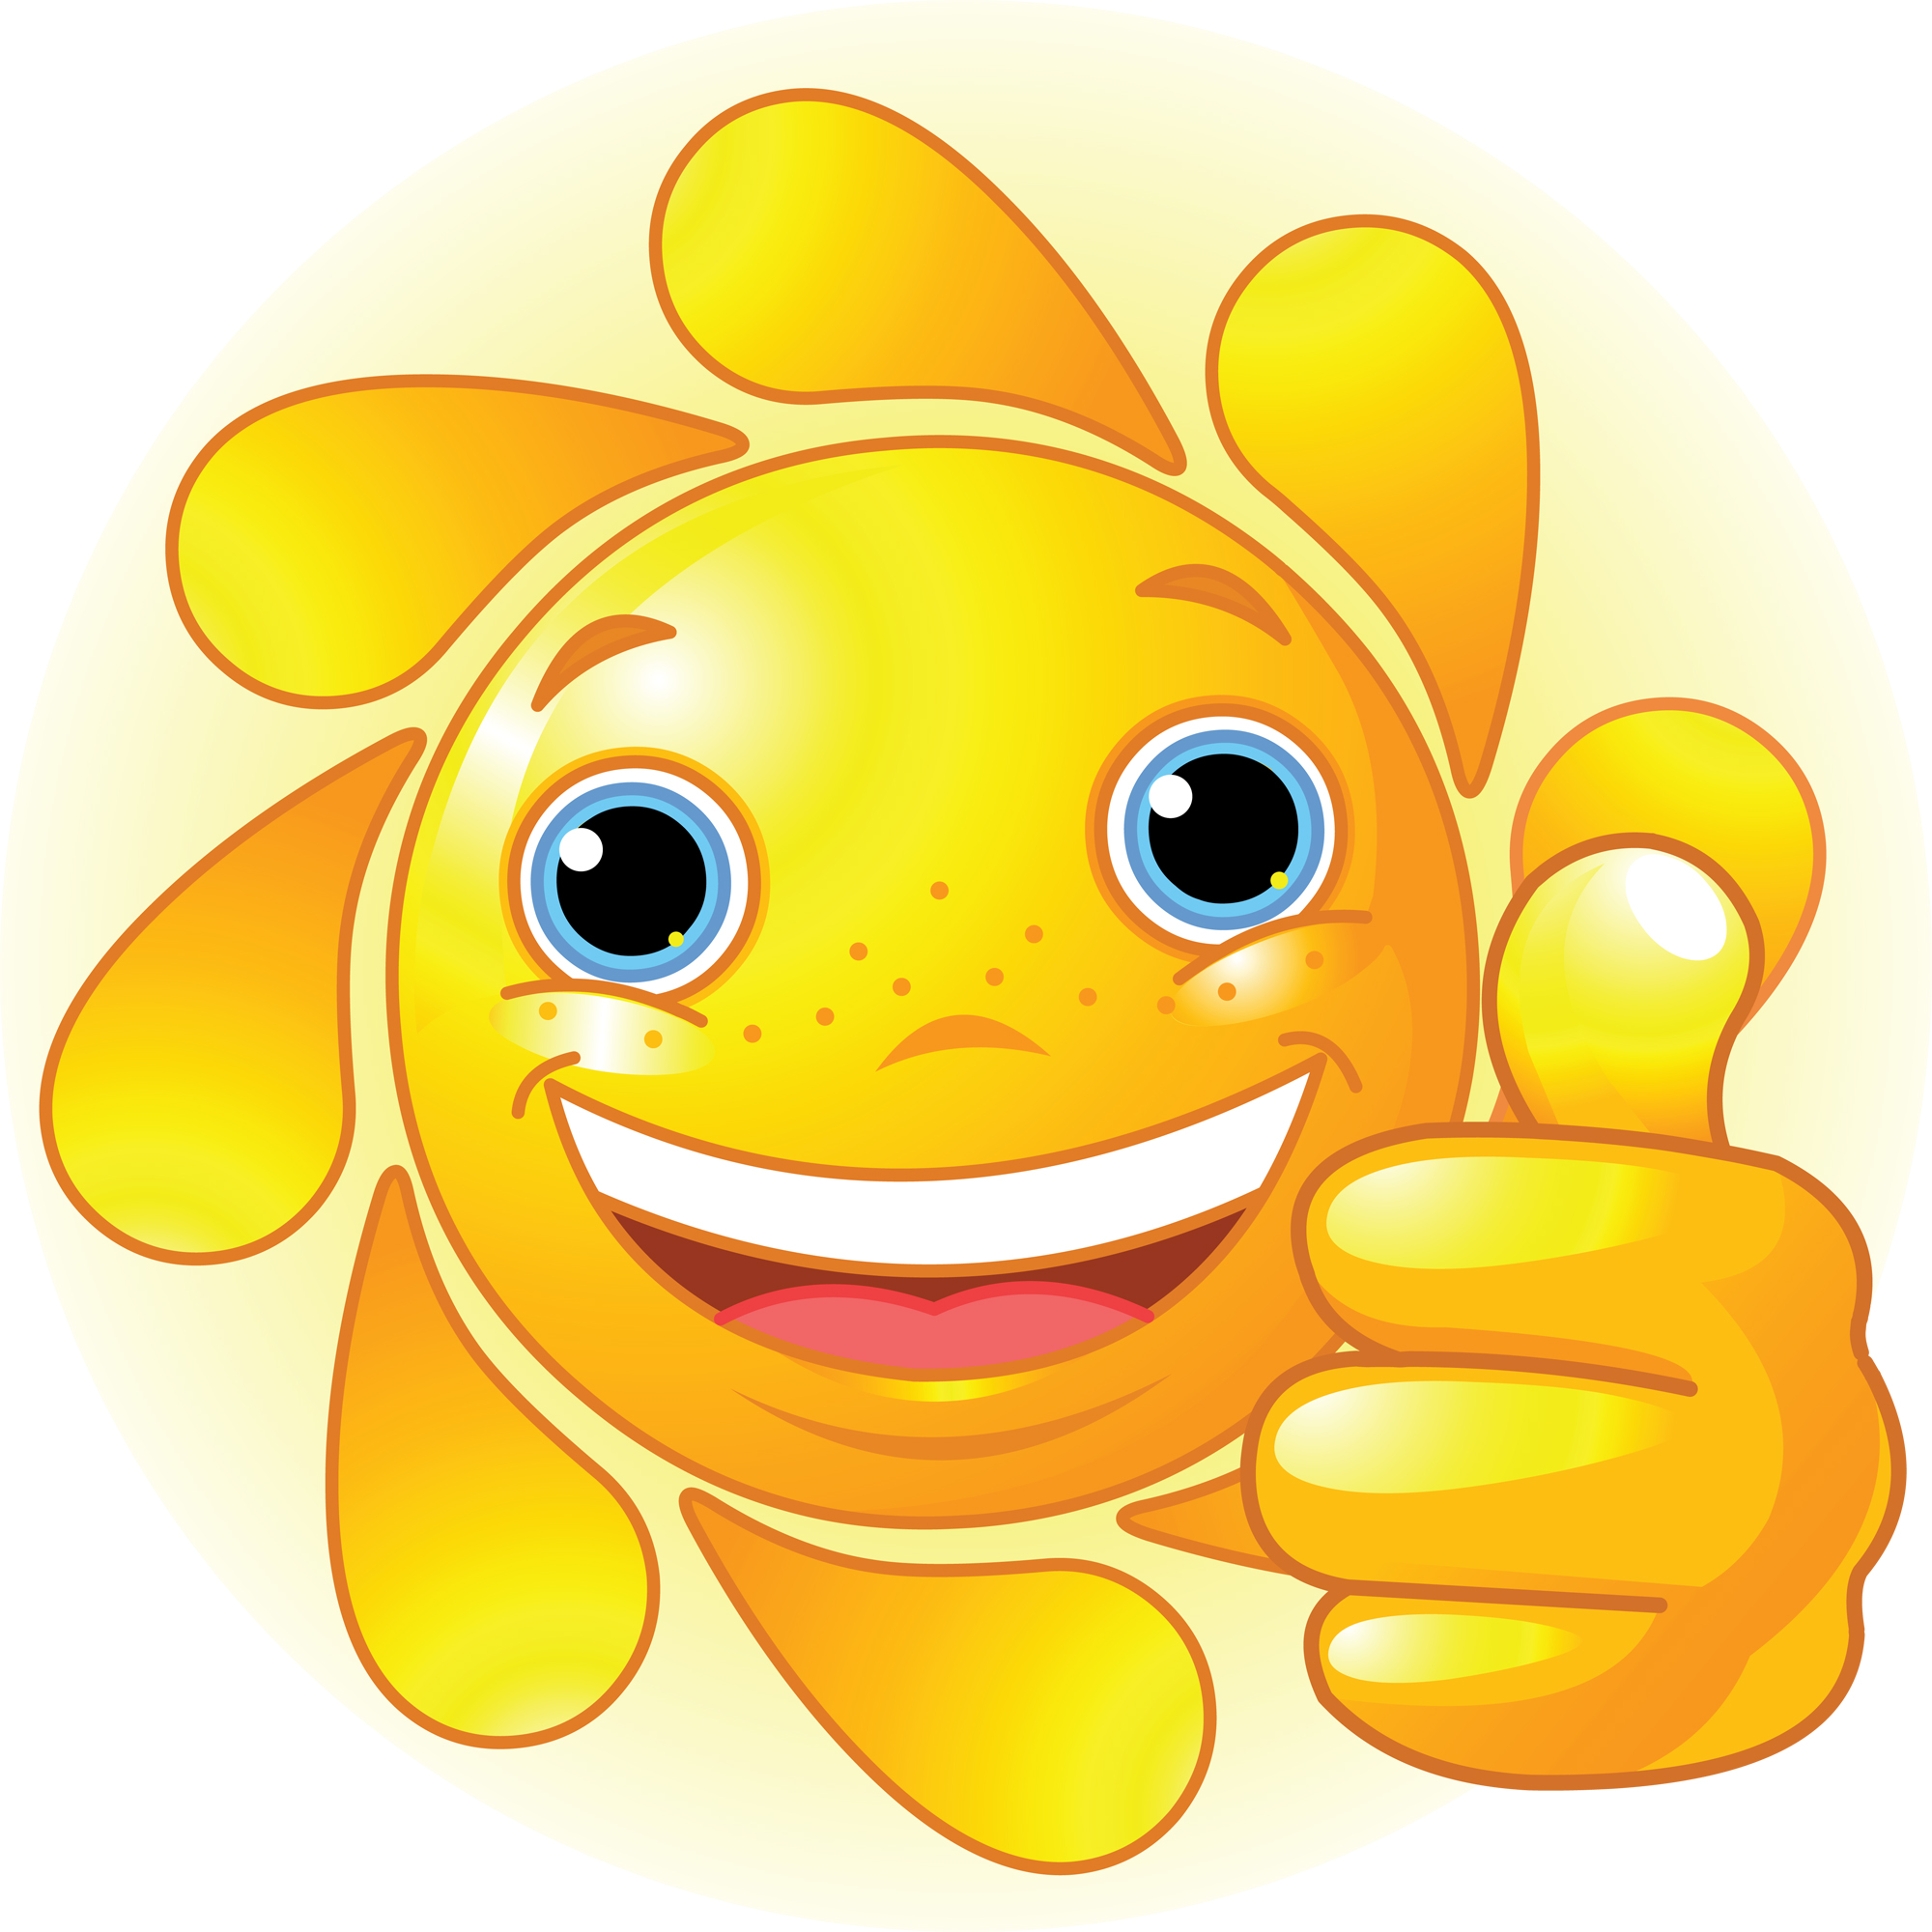 Smiling Sunshine Clipart | Free Download Clip Art | Free Clip Art ...